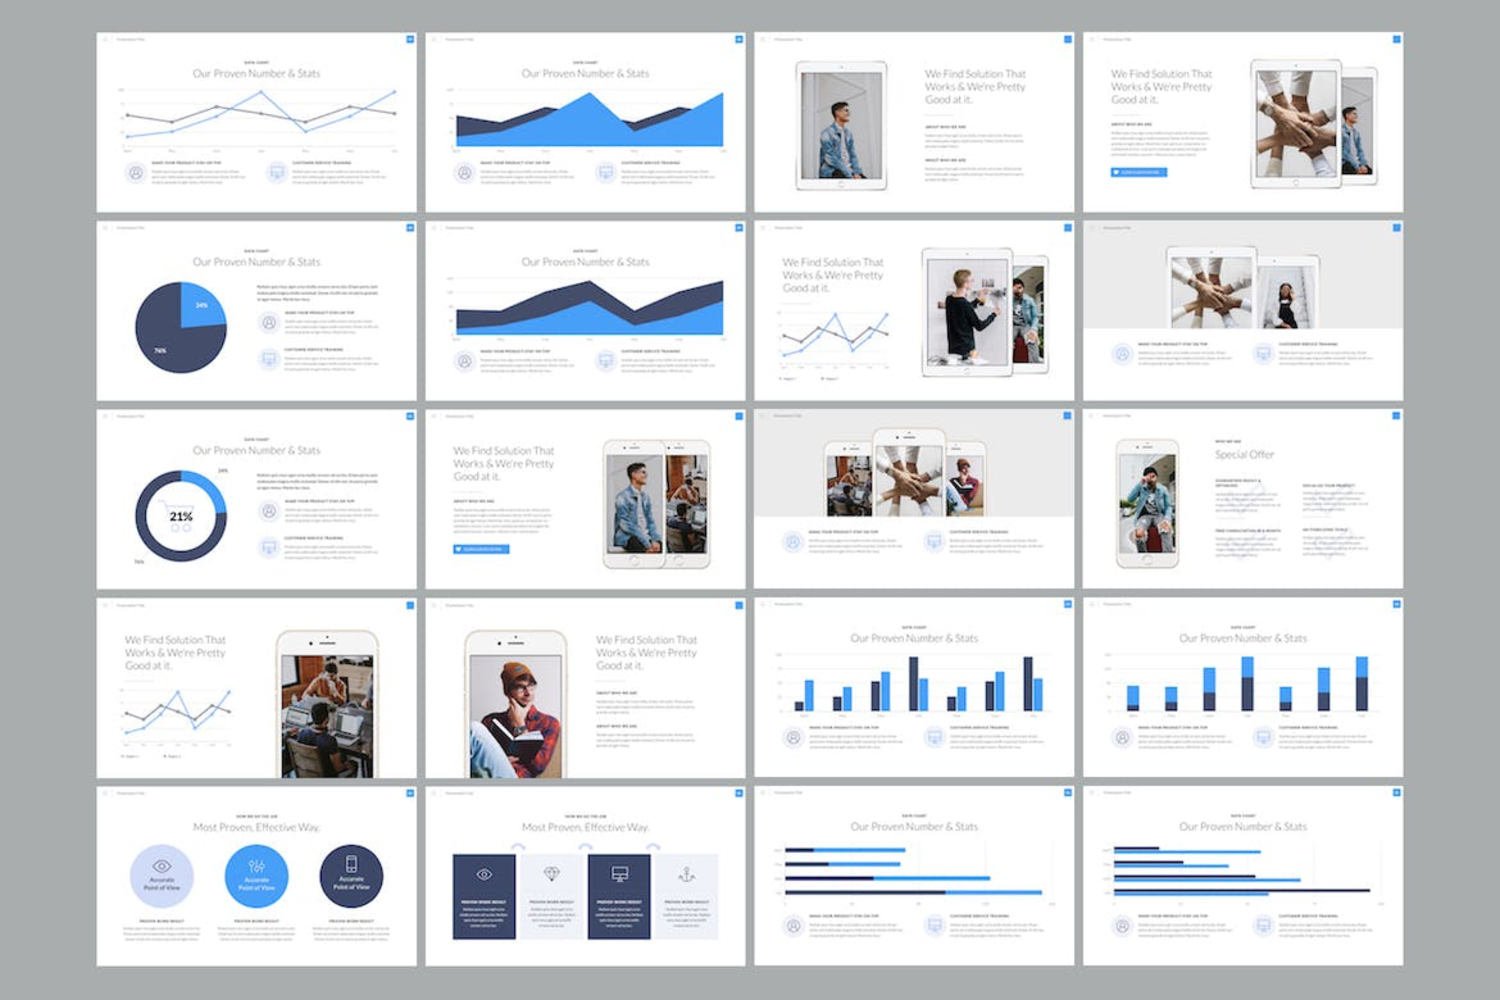 2931 时尚简洁商务数据可视化keynote模版 Core Slides – Simple Presentation Template